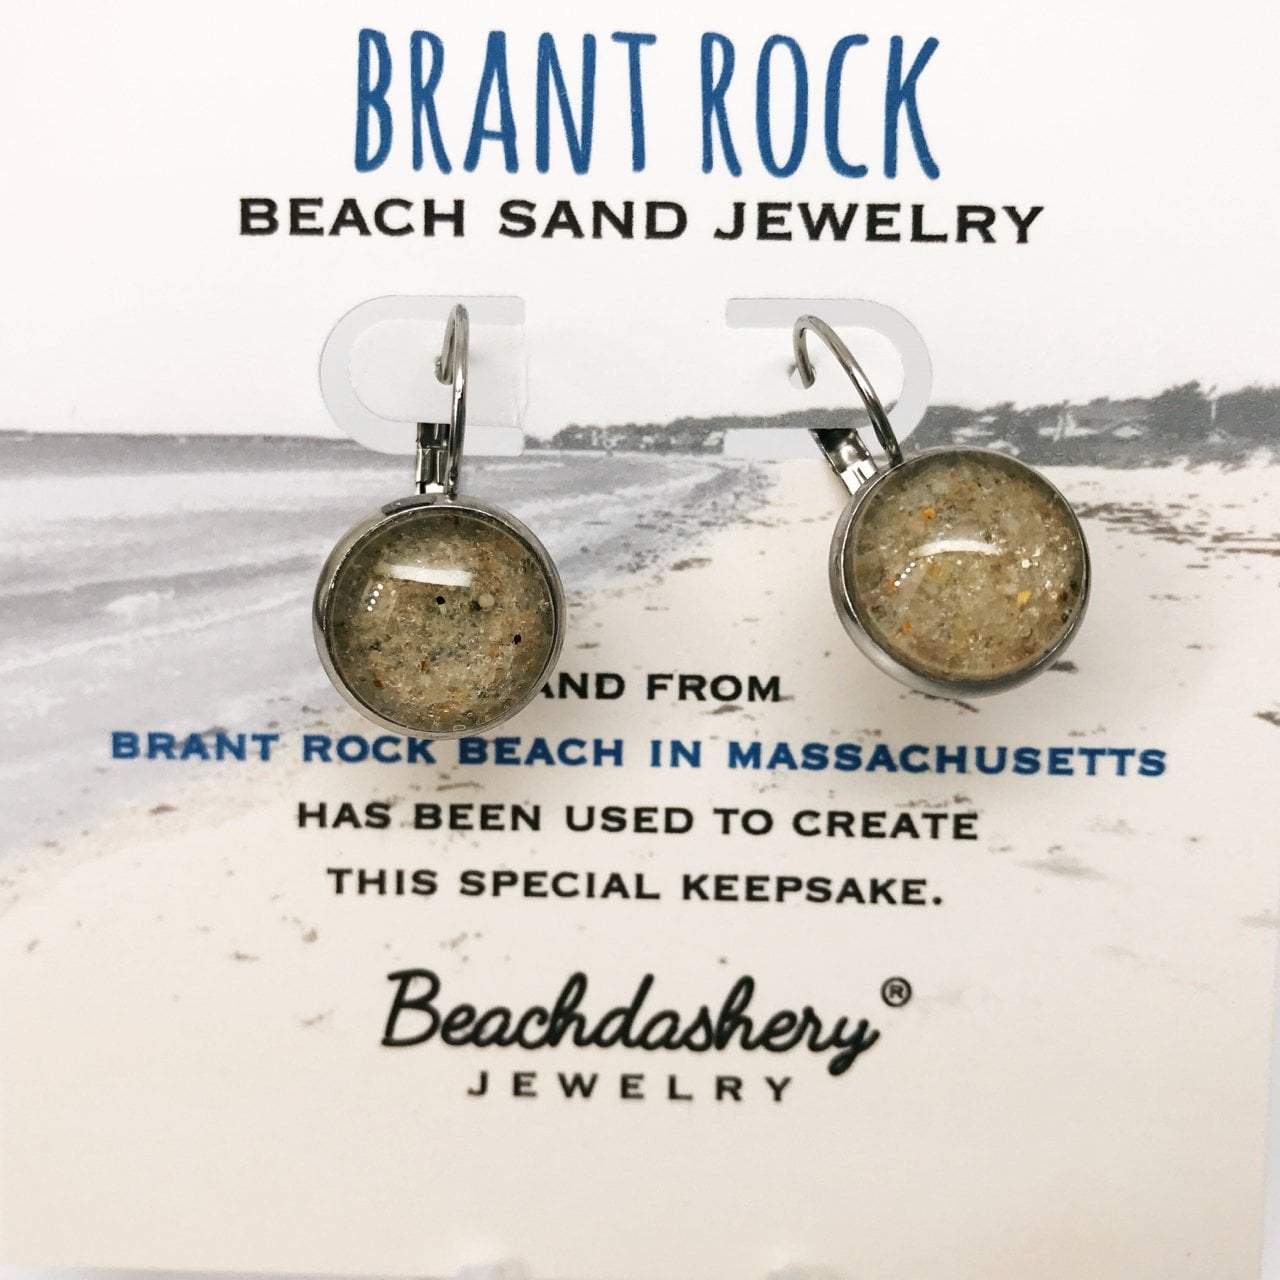 Brant Rock Beach Sand Jewelry Beachdashery® Jewelry